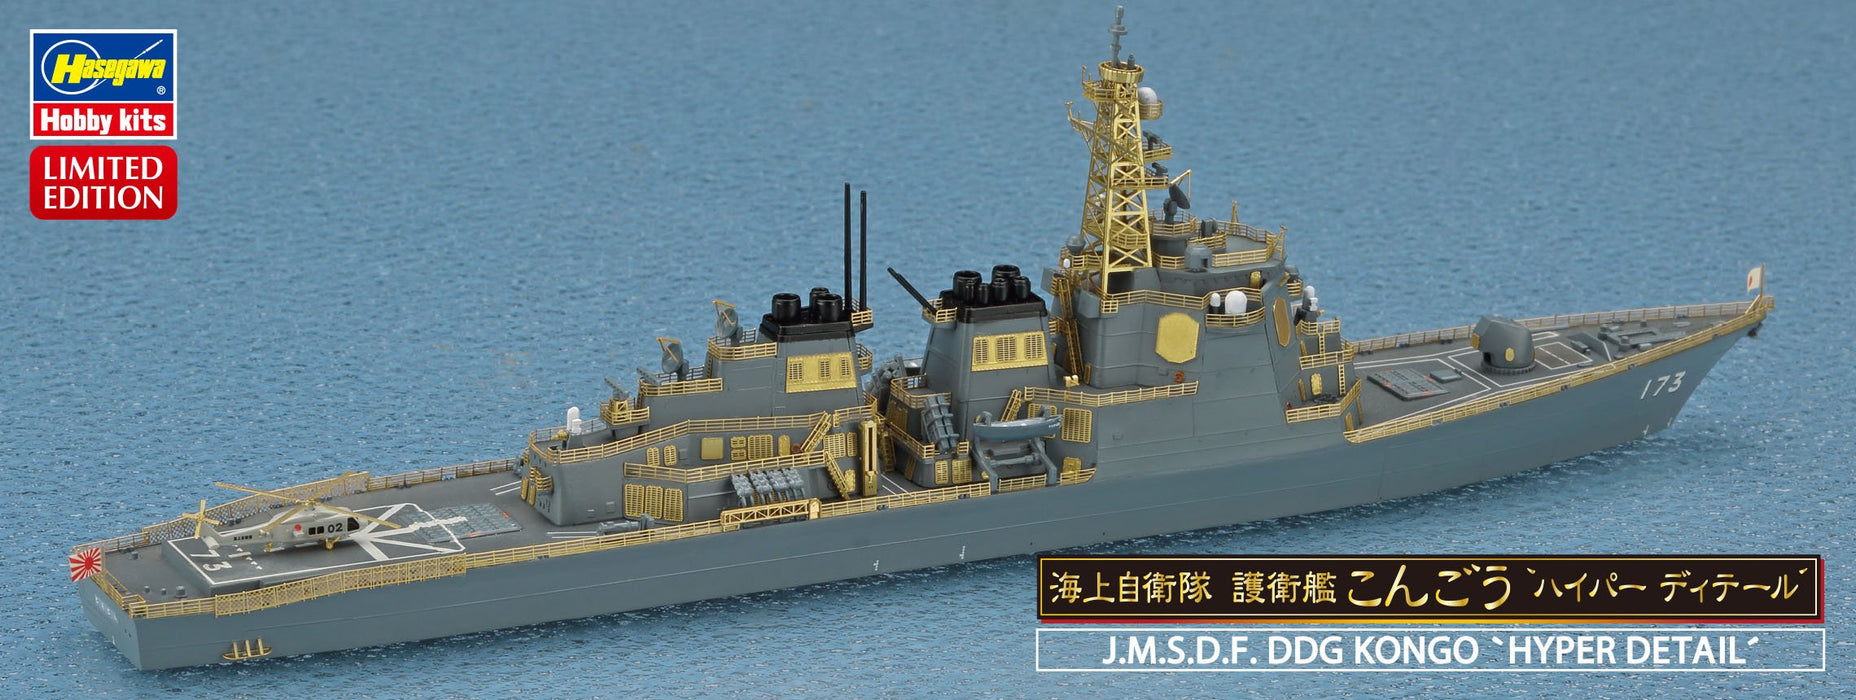 Hasegawa 1/700 Scale Maritime Force Destroyer Kongo Plastic Model Kit 30042